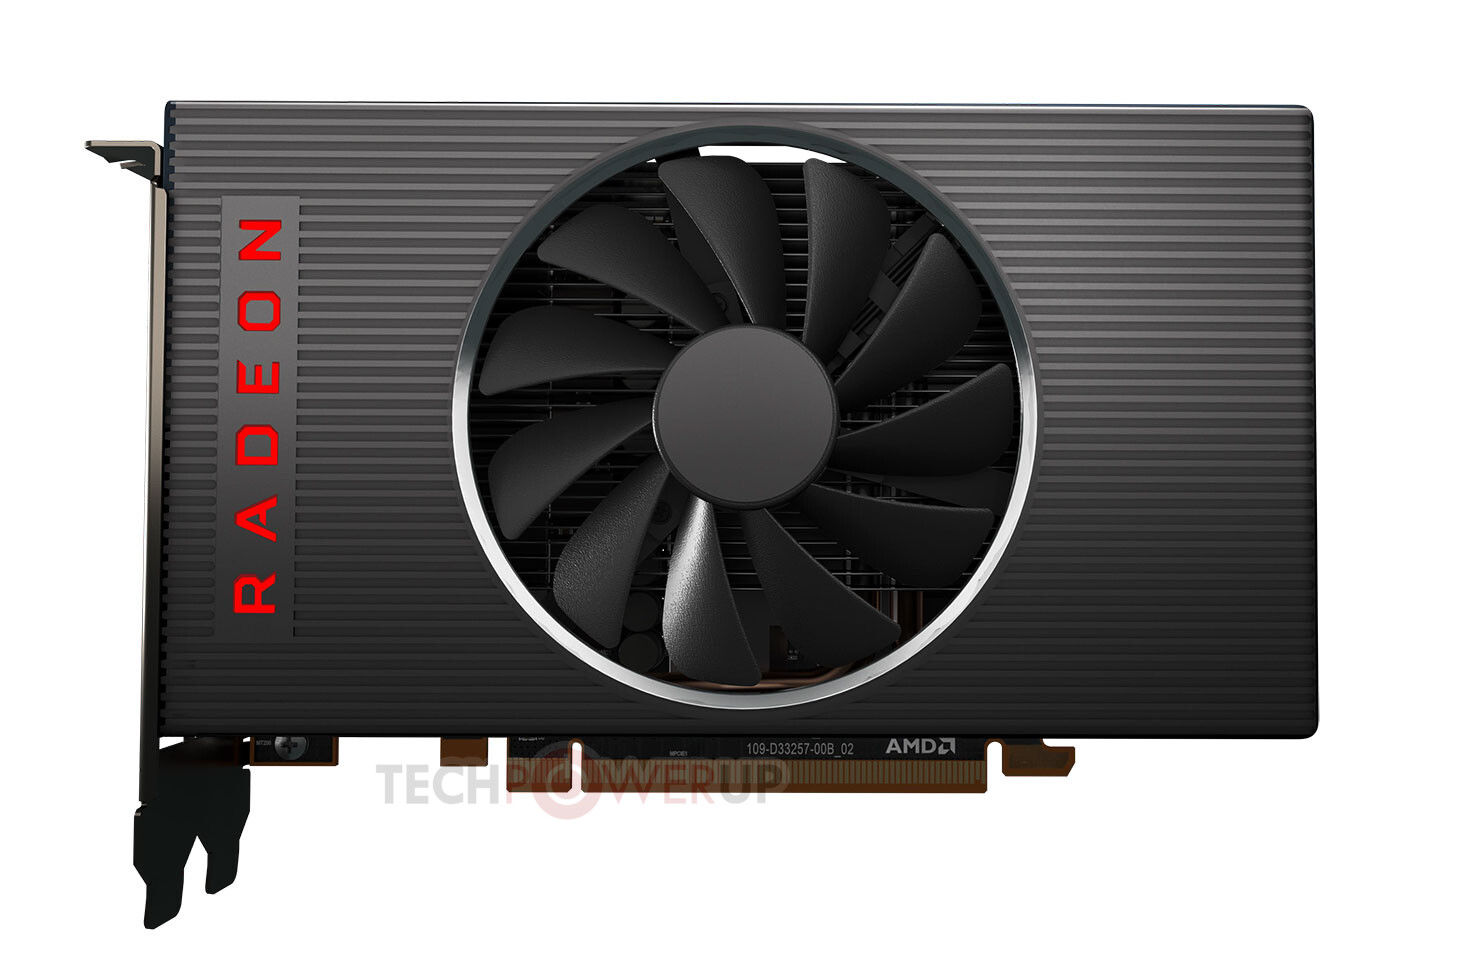 More information about "Η AMD ανακοινώνει την κυκλοφορία στα καταστήματα λιανικής για την Radeon RX 5500 XT"